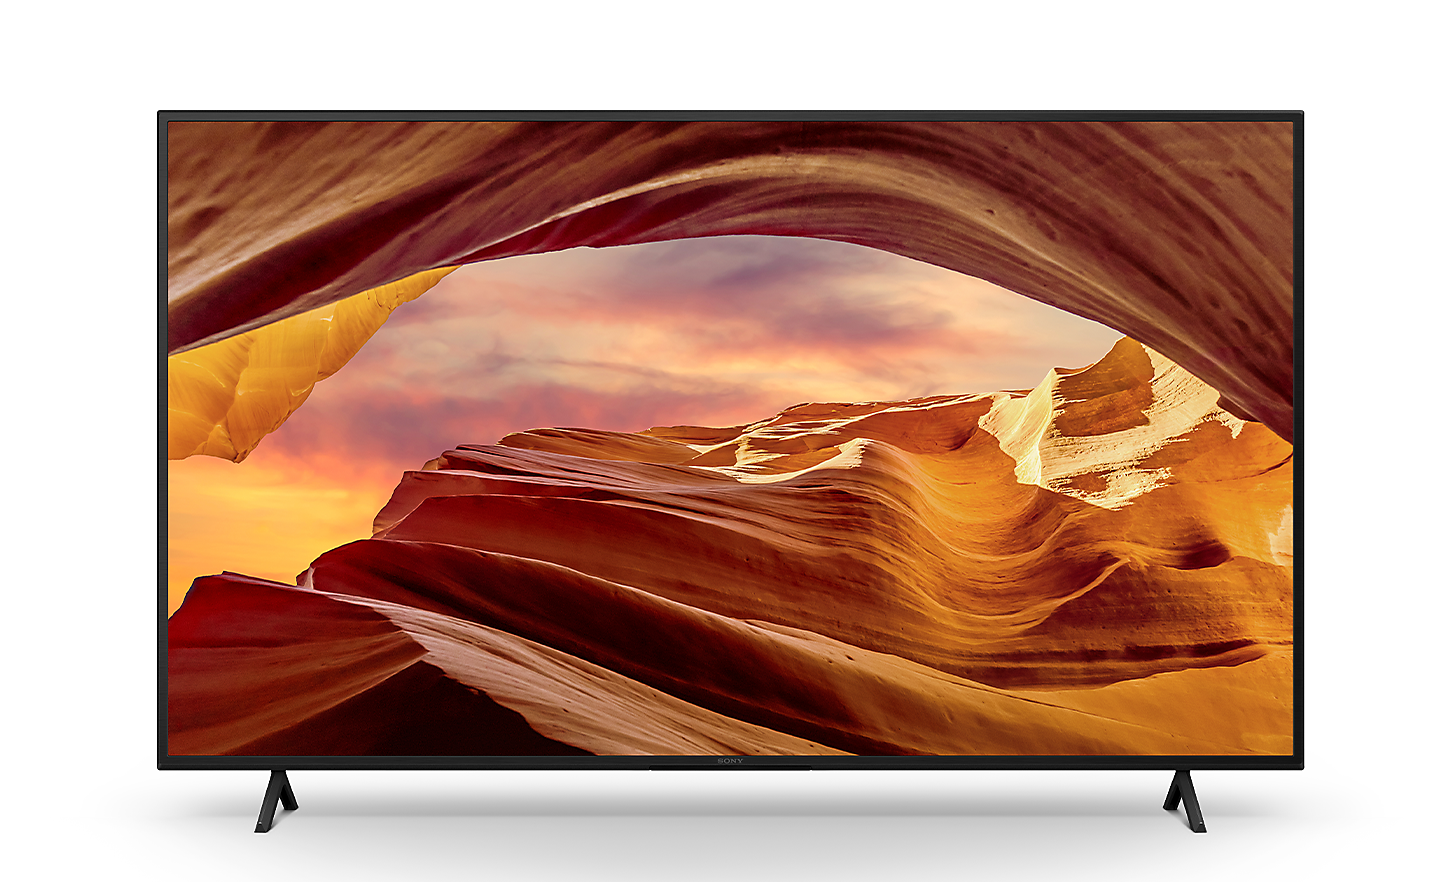 Vista frontal de un televisor BRAVIA serie X77L/X78L sobre el soporte mostrando un espectacular paisaje rocoso